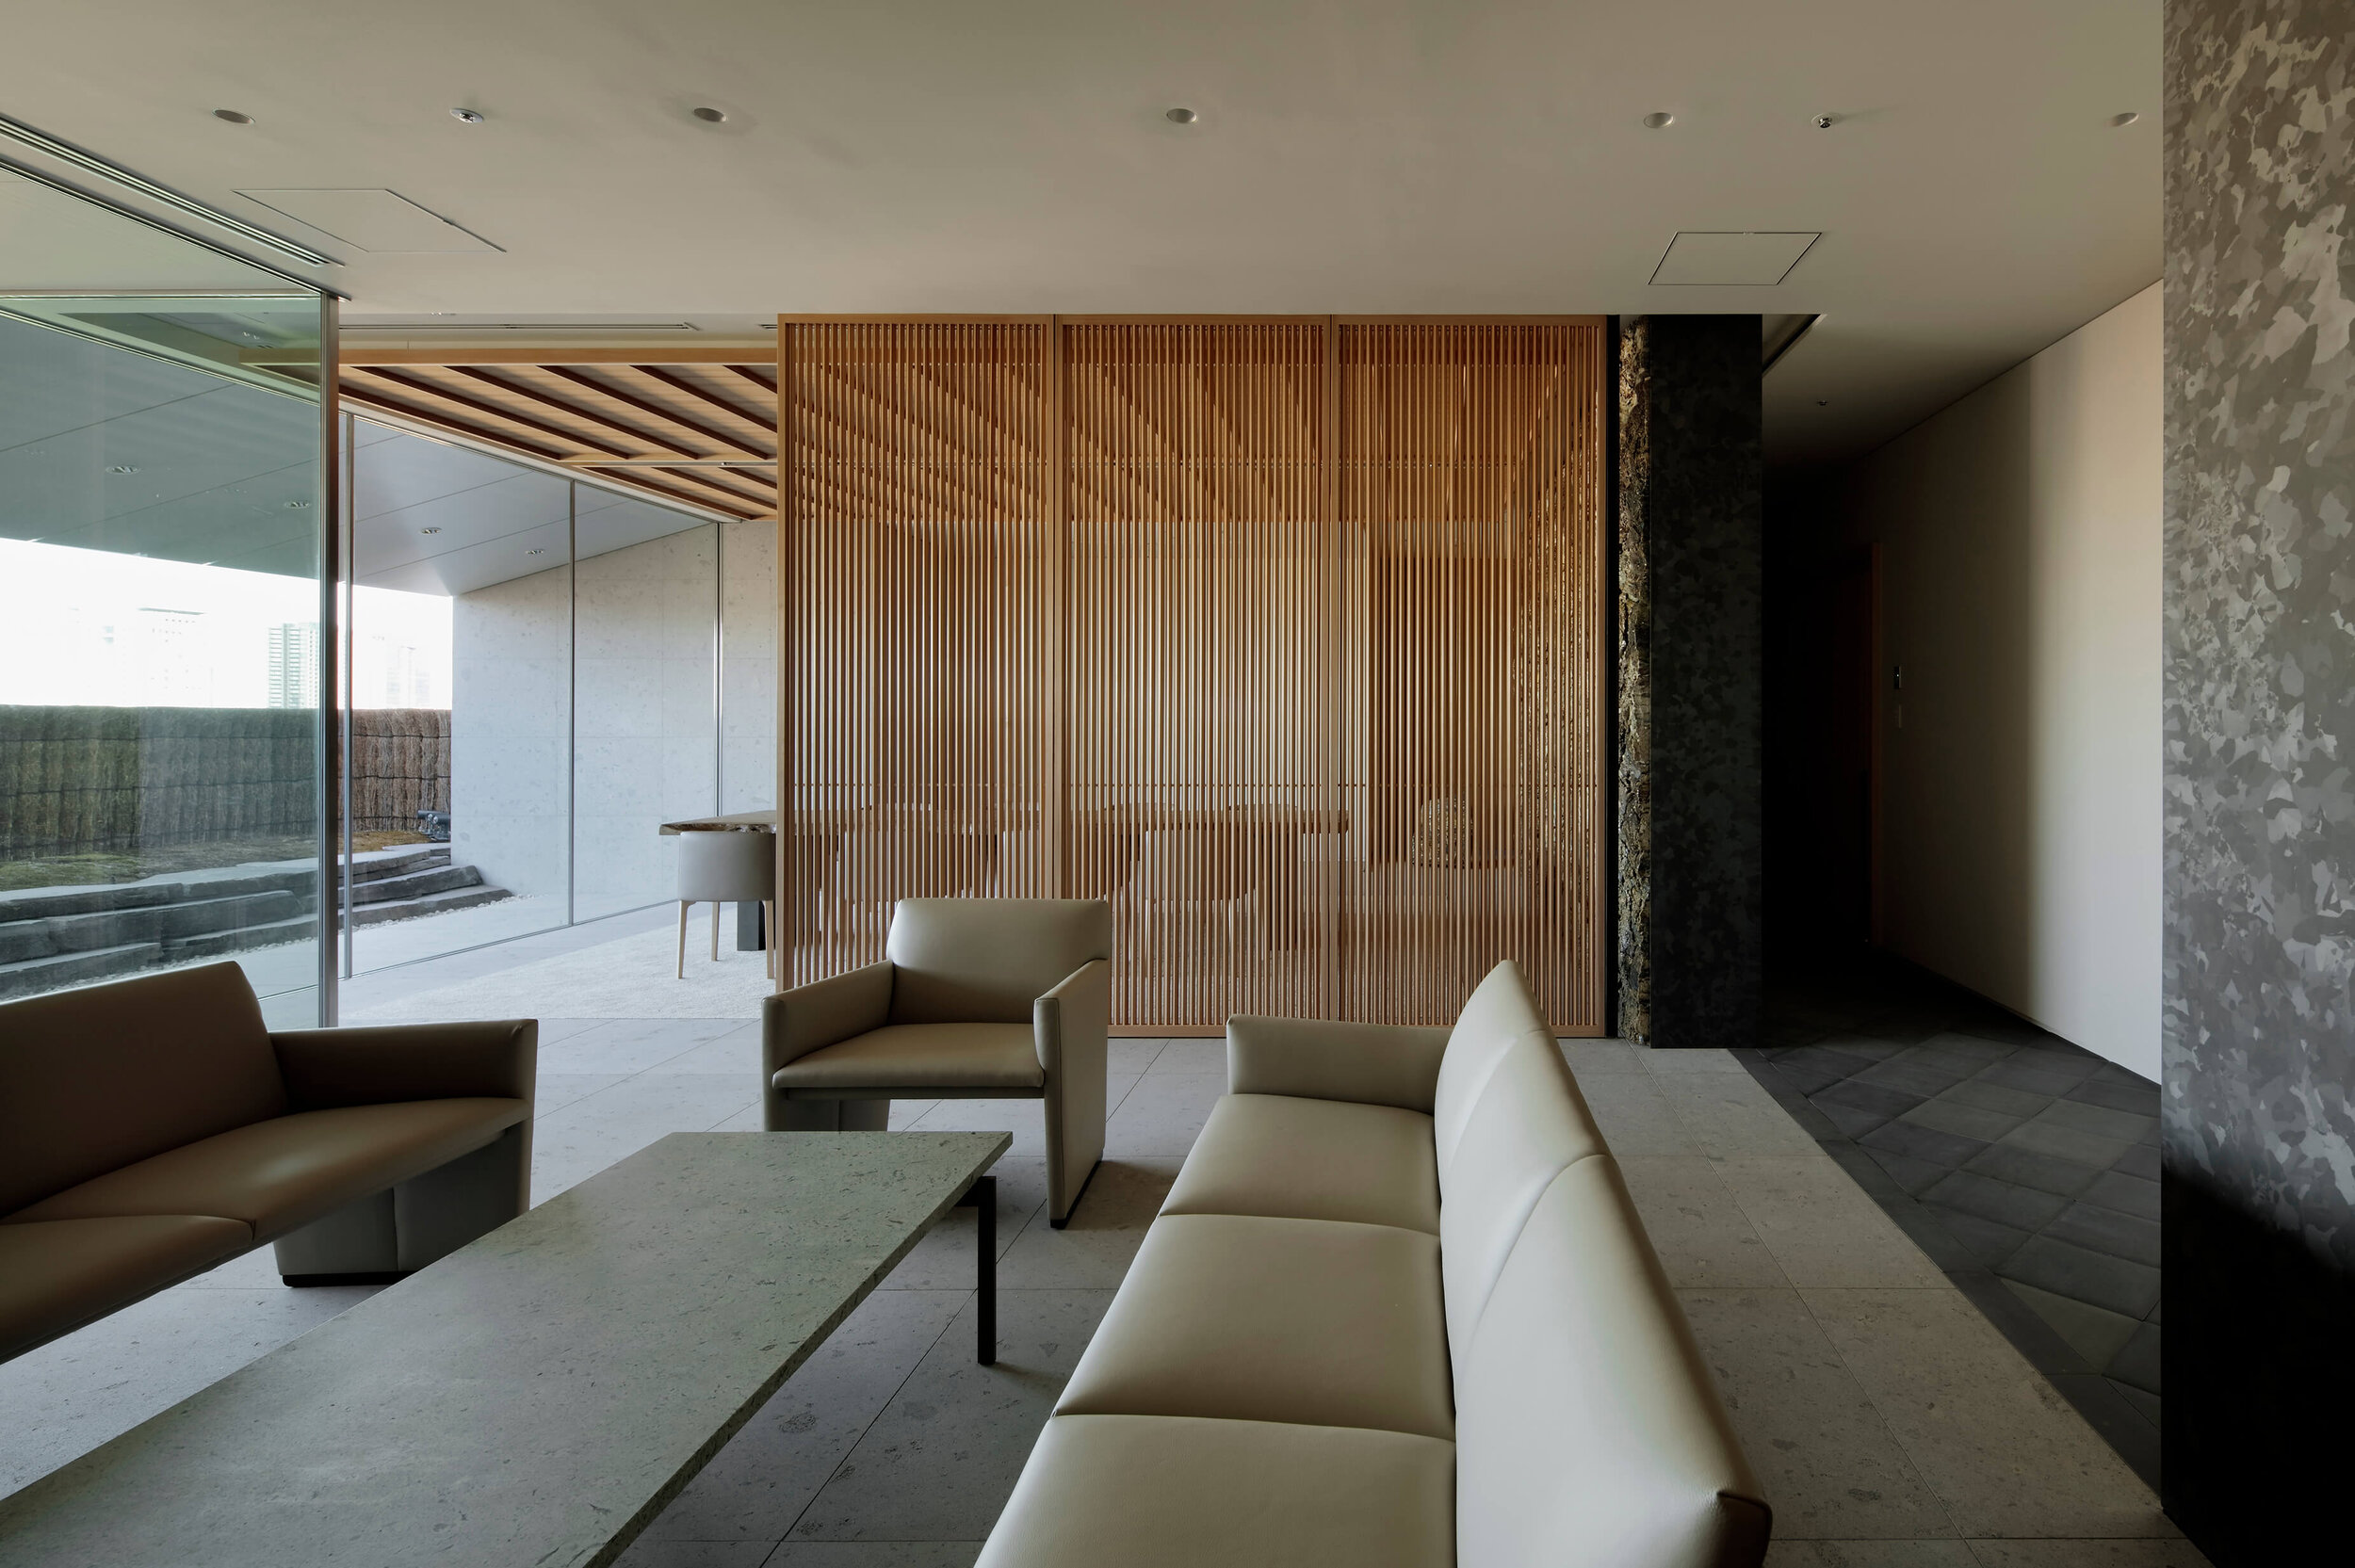 sakakida-tomoyuki-architect-ntv-office-interior-design-tokyo-japan-idreit-002m.jpg